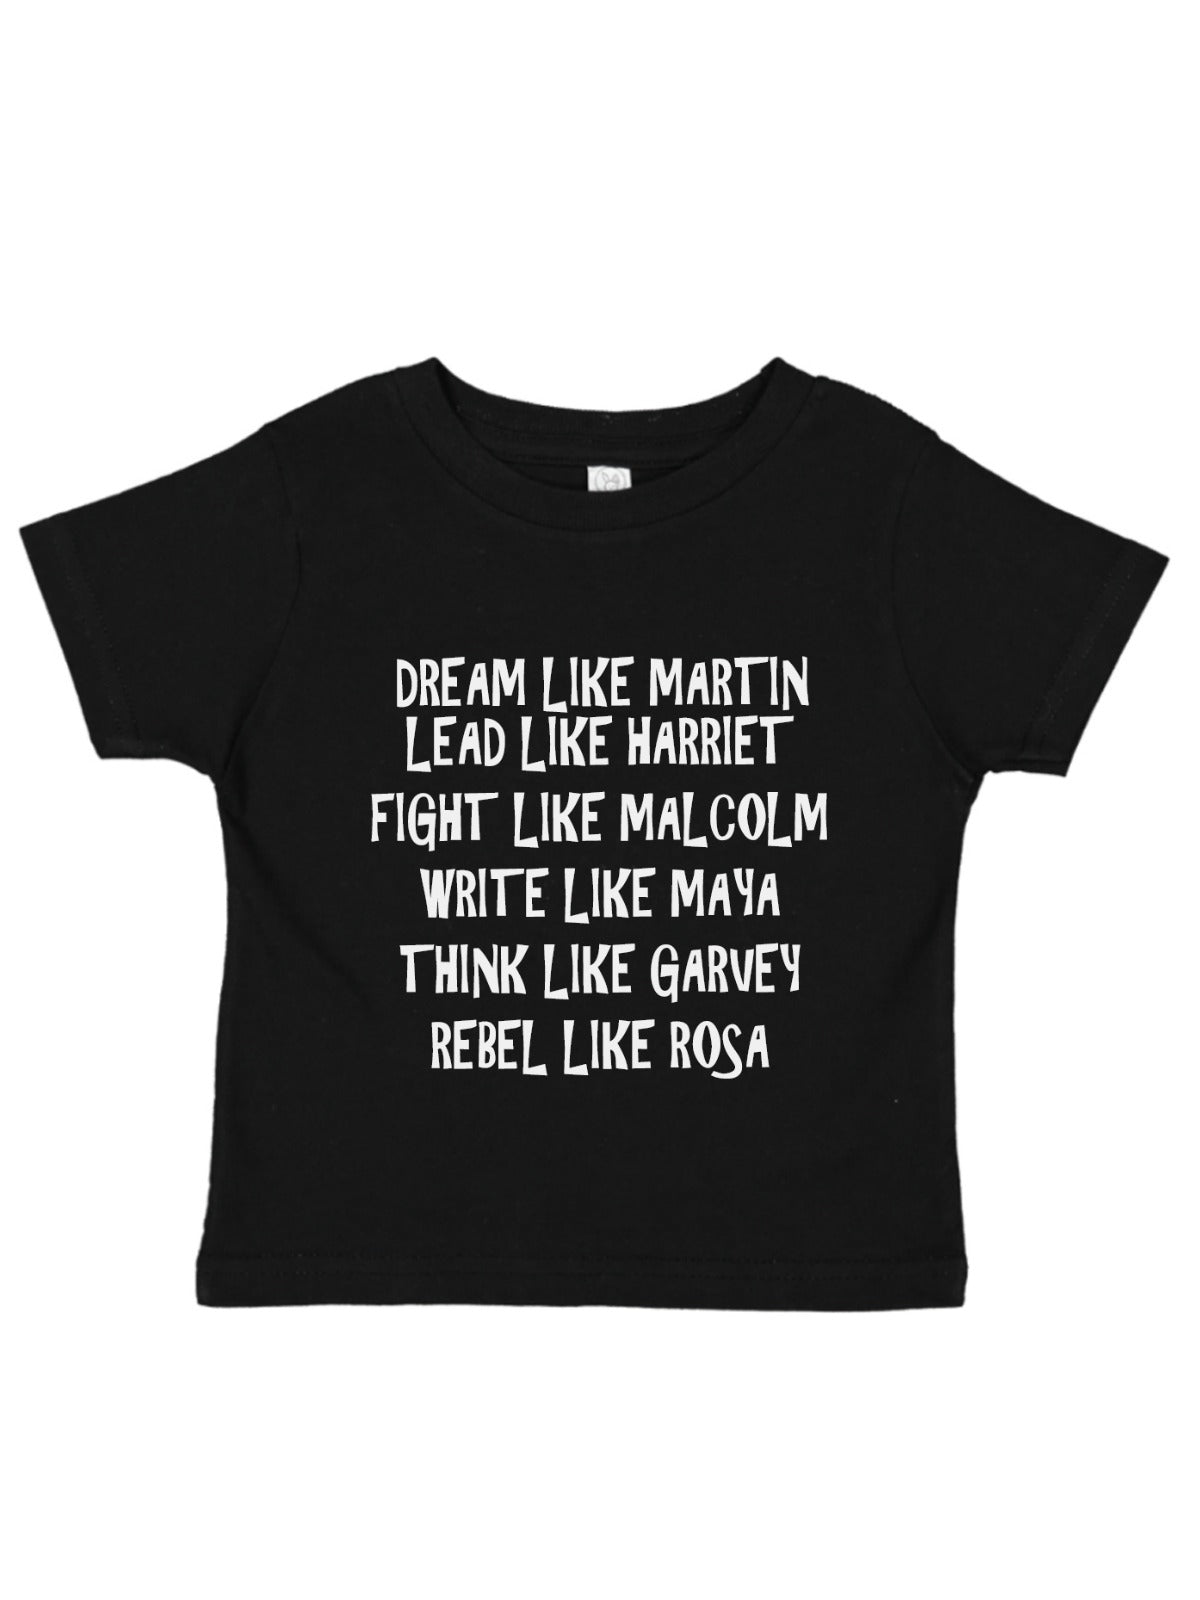 Dream like Martin Kids Black History Shirt, Short Sleeve